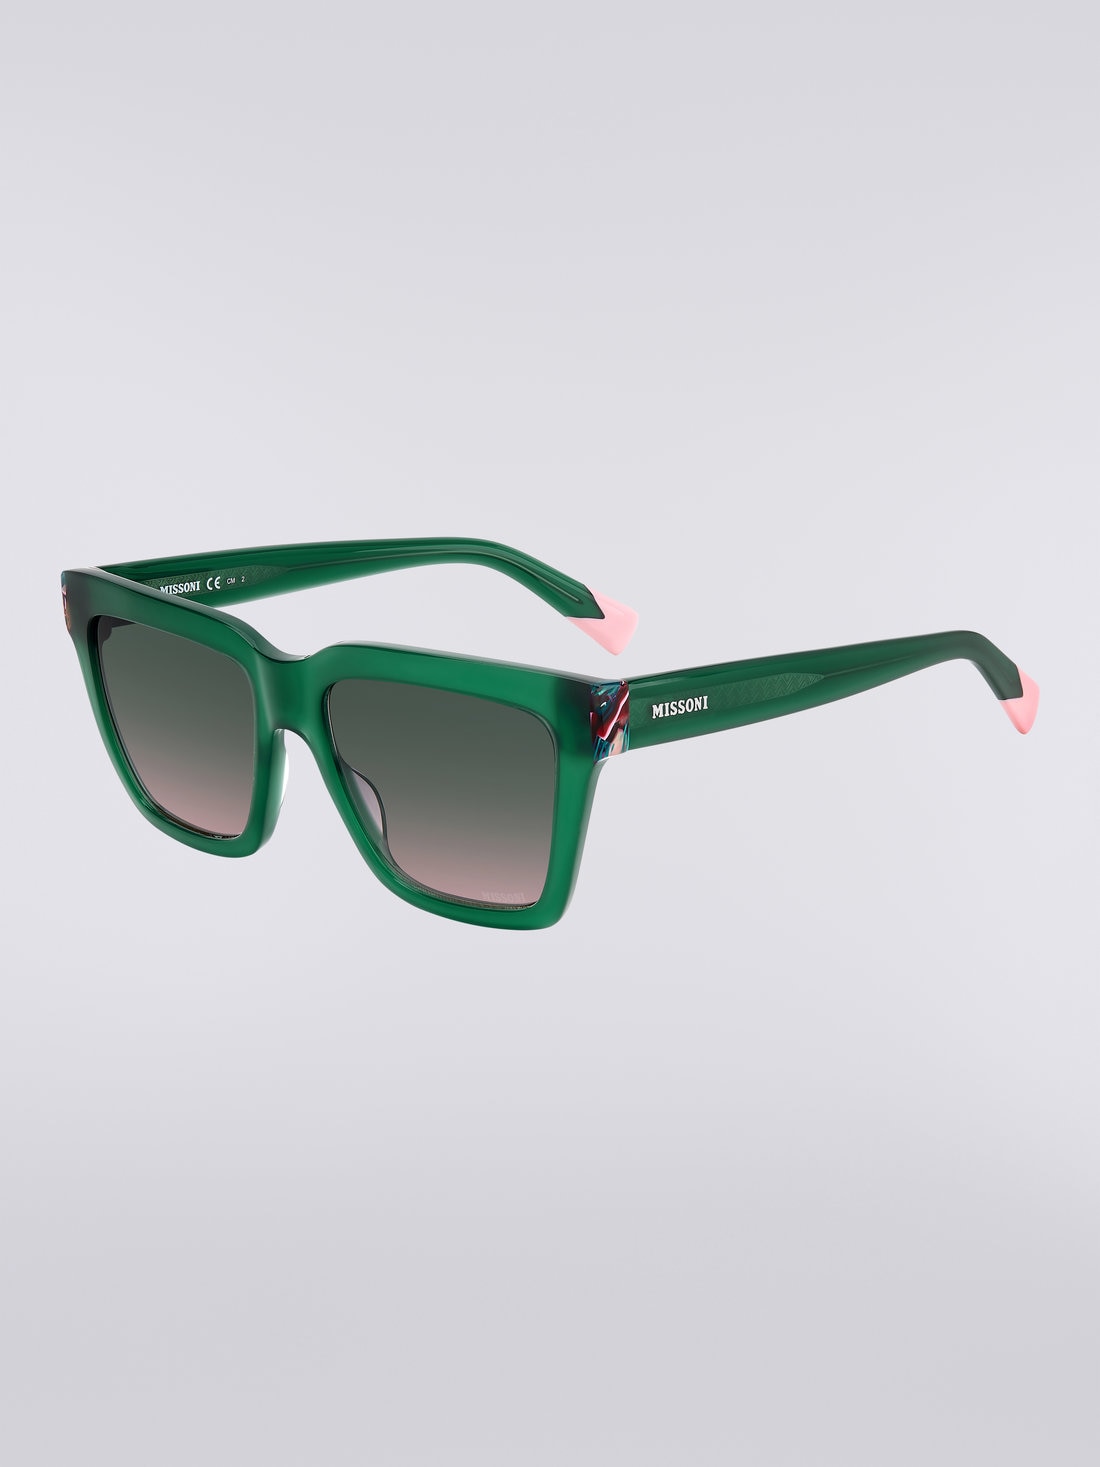 Missoni Seasonal Acetate Sunglasses, Green & Pink - 8051575840203 - 1